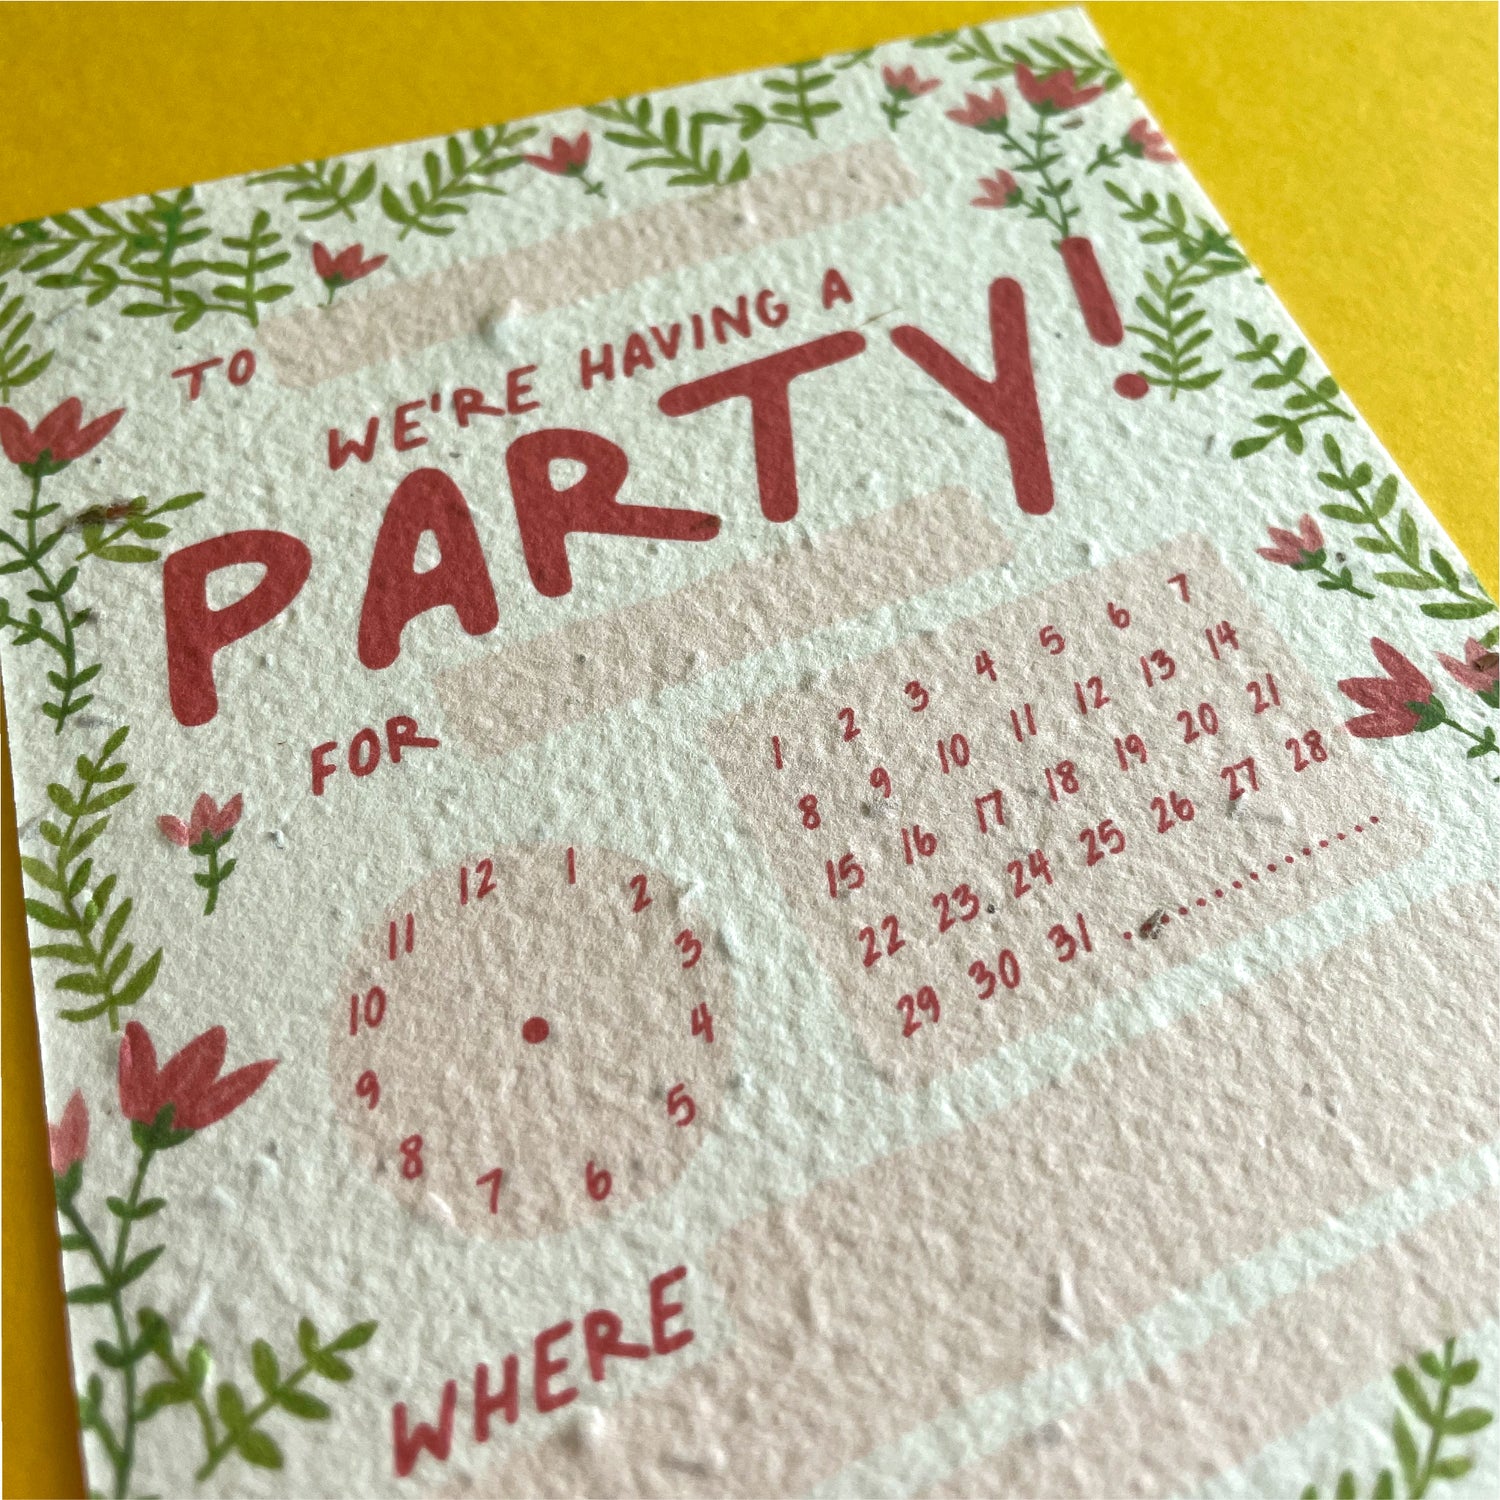 Summer Garden Plant-a-Party Invitation Set